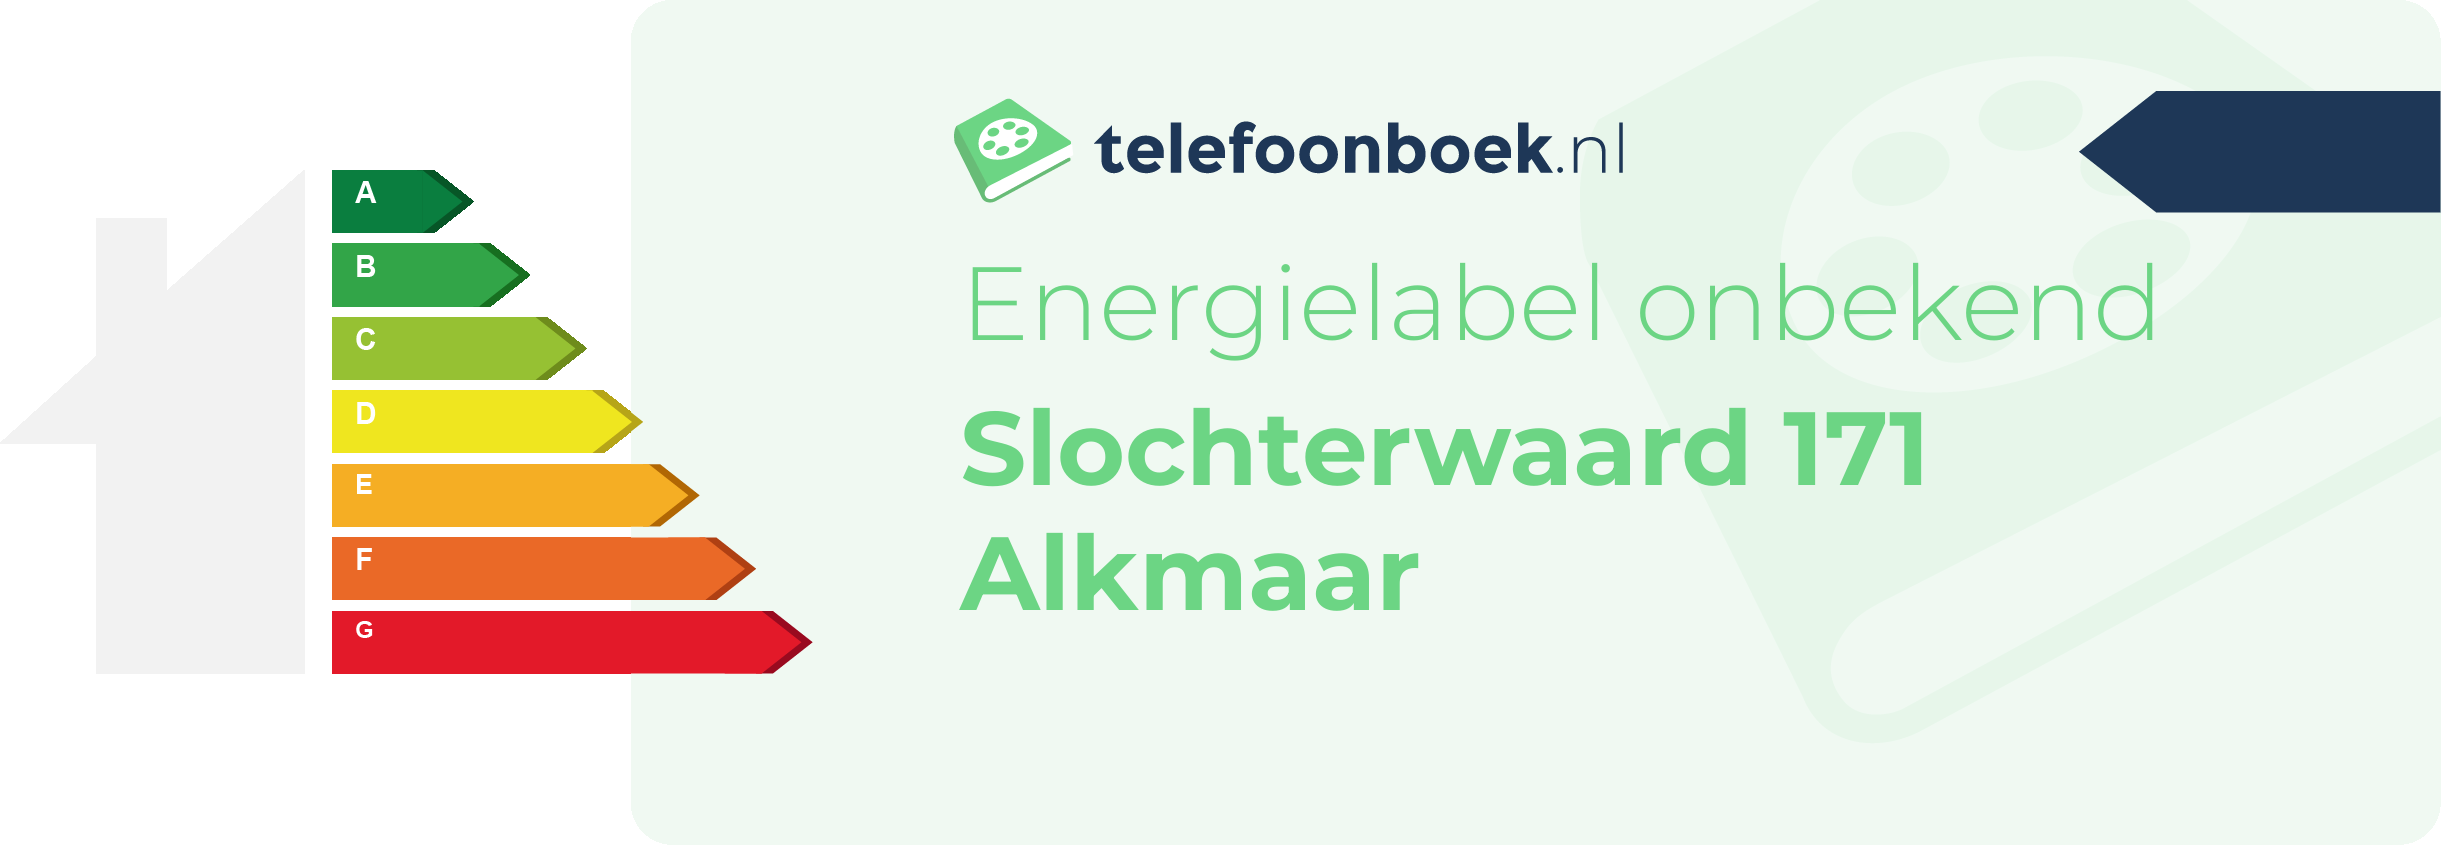 Energielabel Slochterwaard 171 Alkmaar